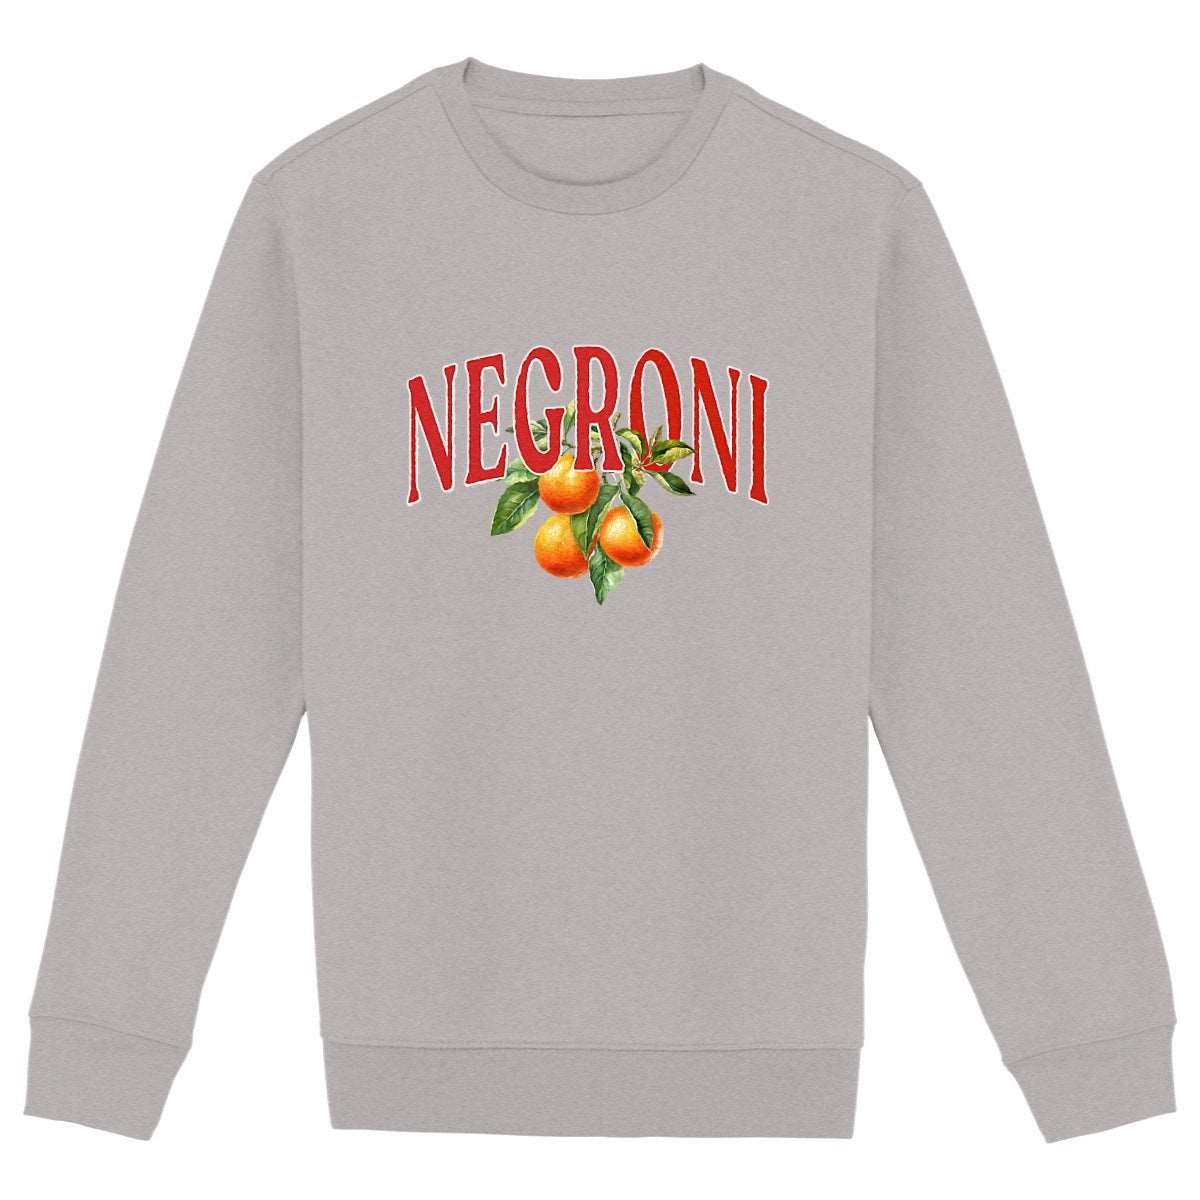 Negroni Life - Organic Sweatshirt - The Refined Spirit